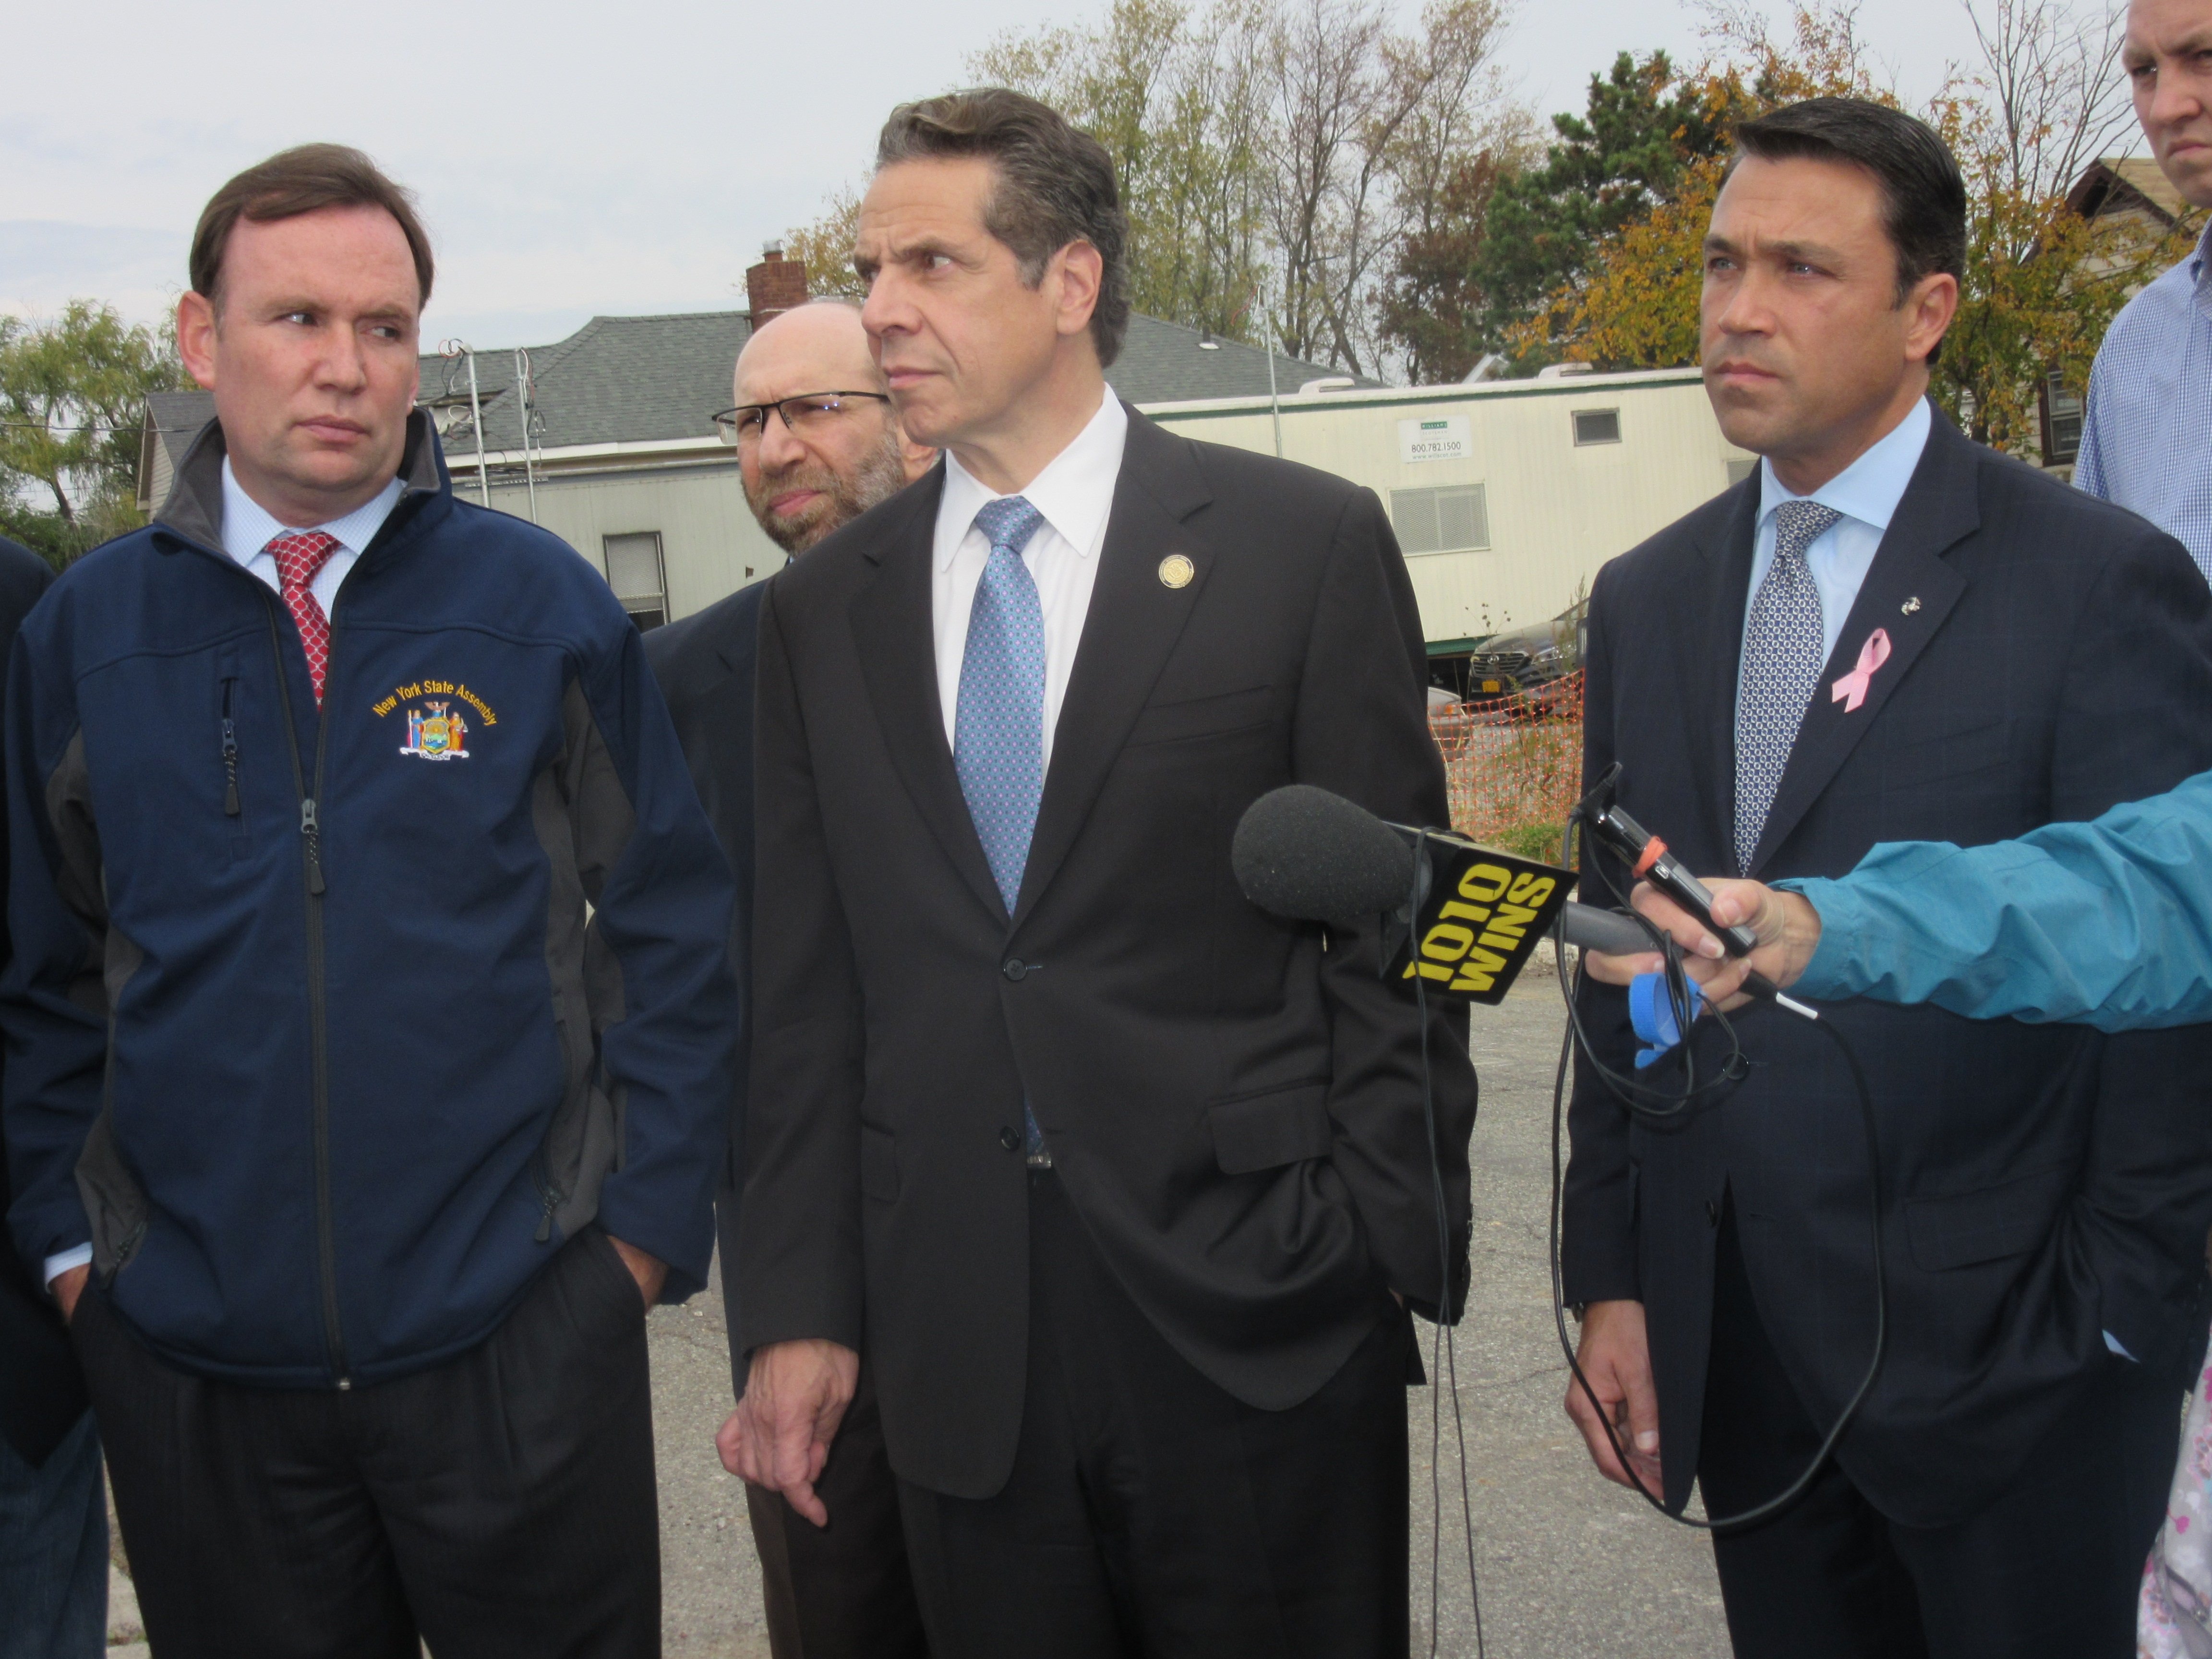 Assemblyman Michael Cusick, Gov. Andrew Cuomo and Congressman Grimm in Staten Island today (Photo: Will Bredderman).